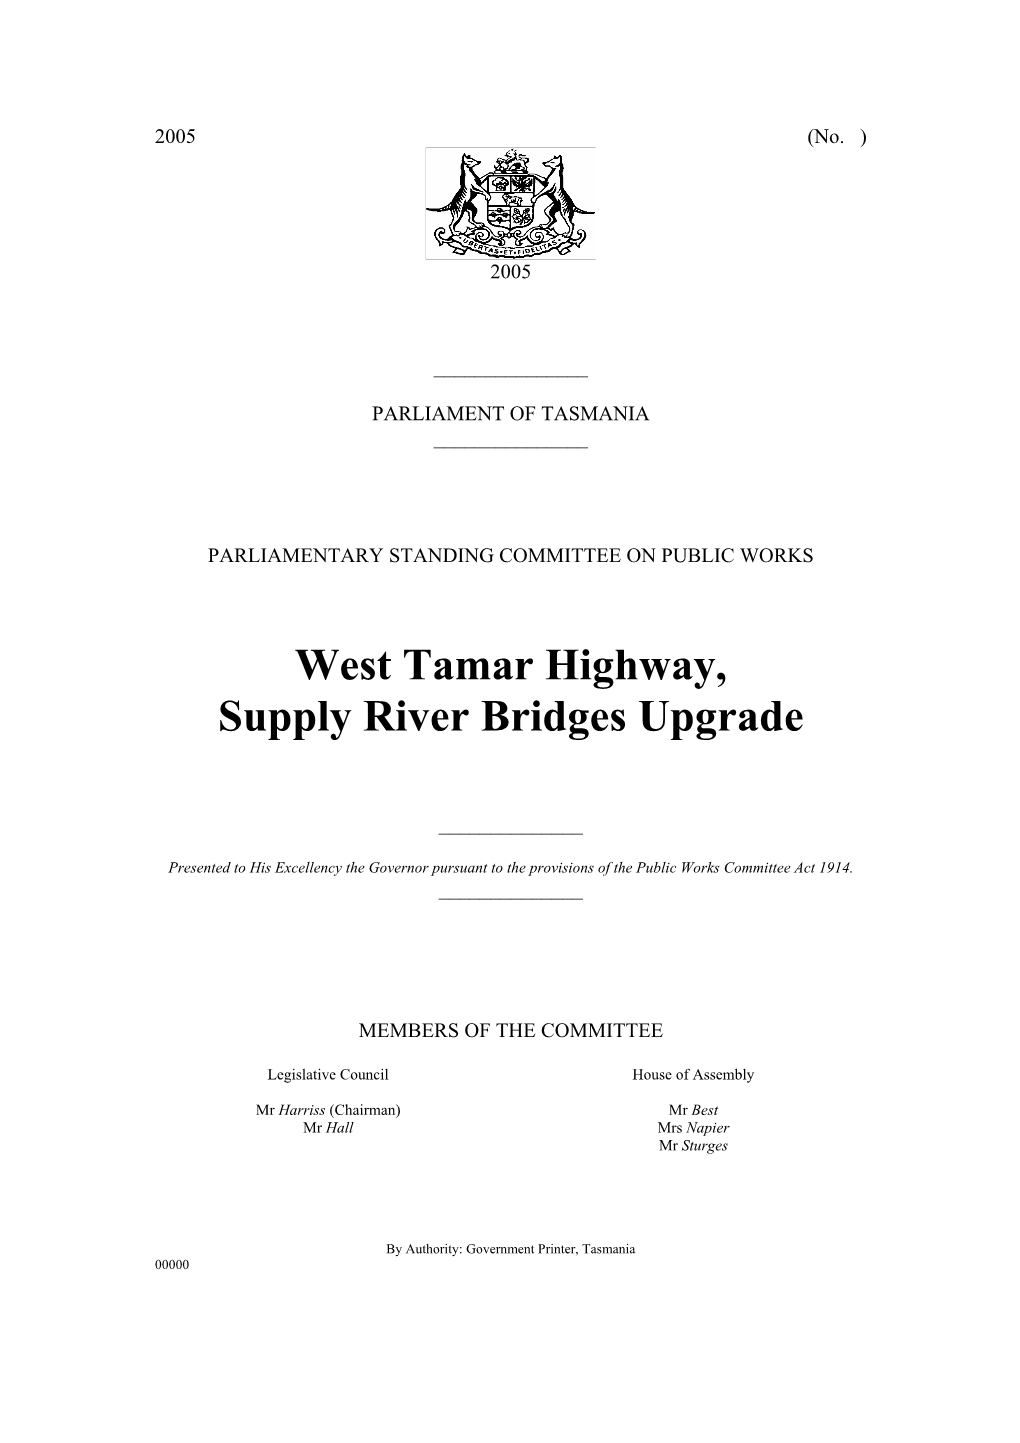 West Tamar Highway, Supply River Bridges Upgrade